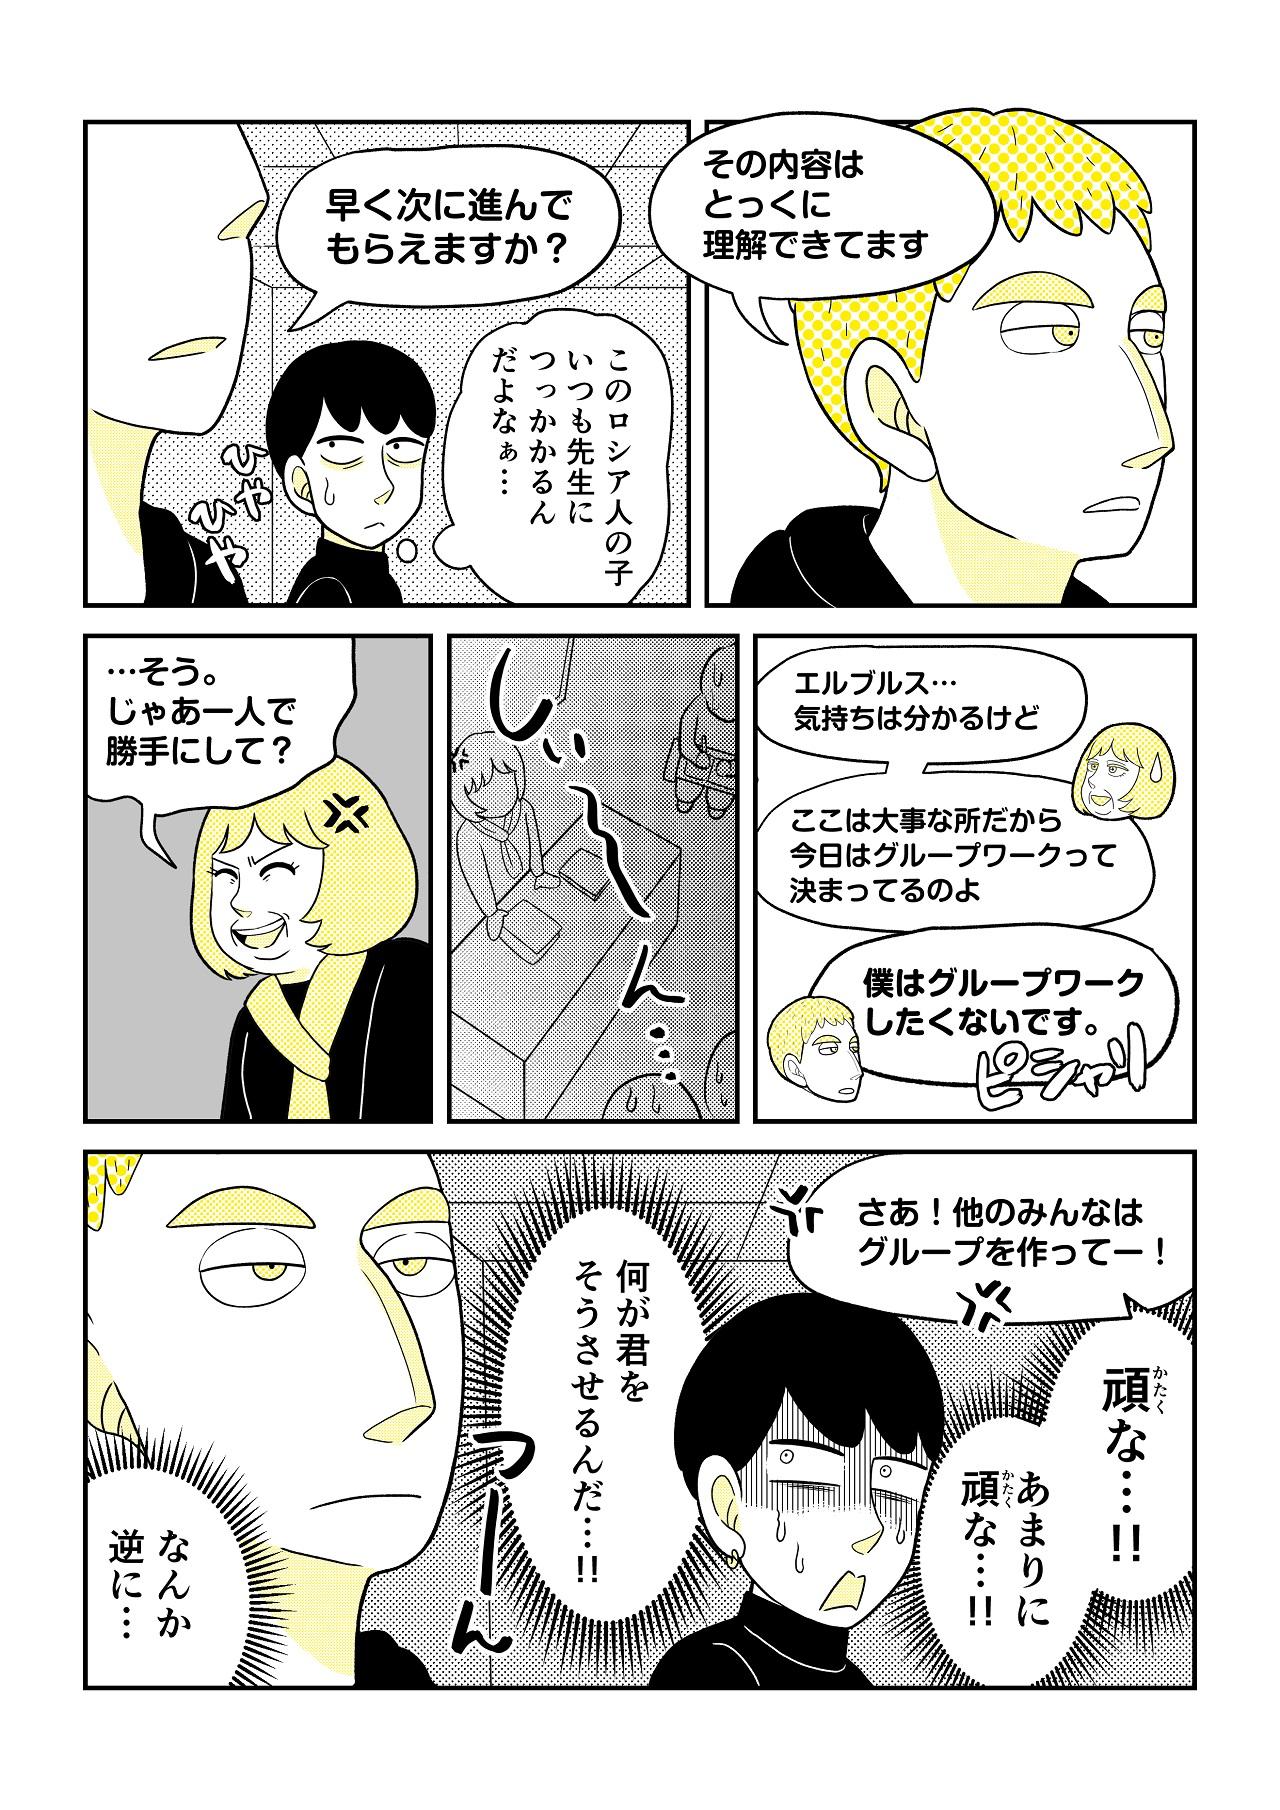 https://www.ryugaku.co.jp/column/images/09_02.jpg